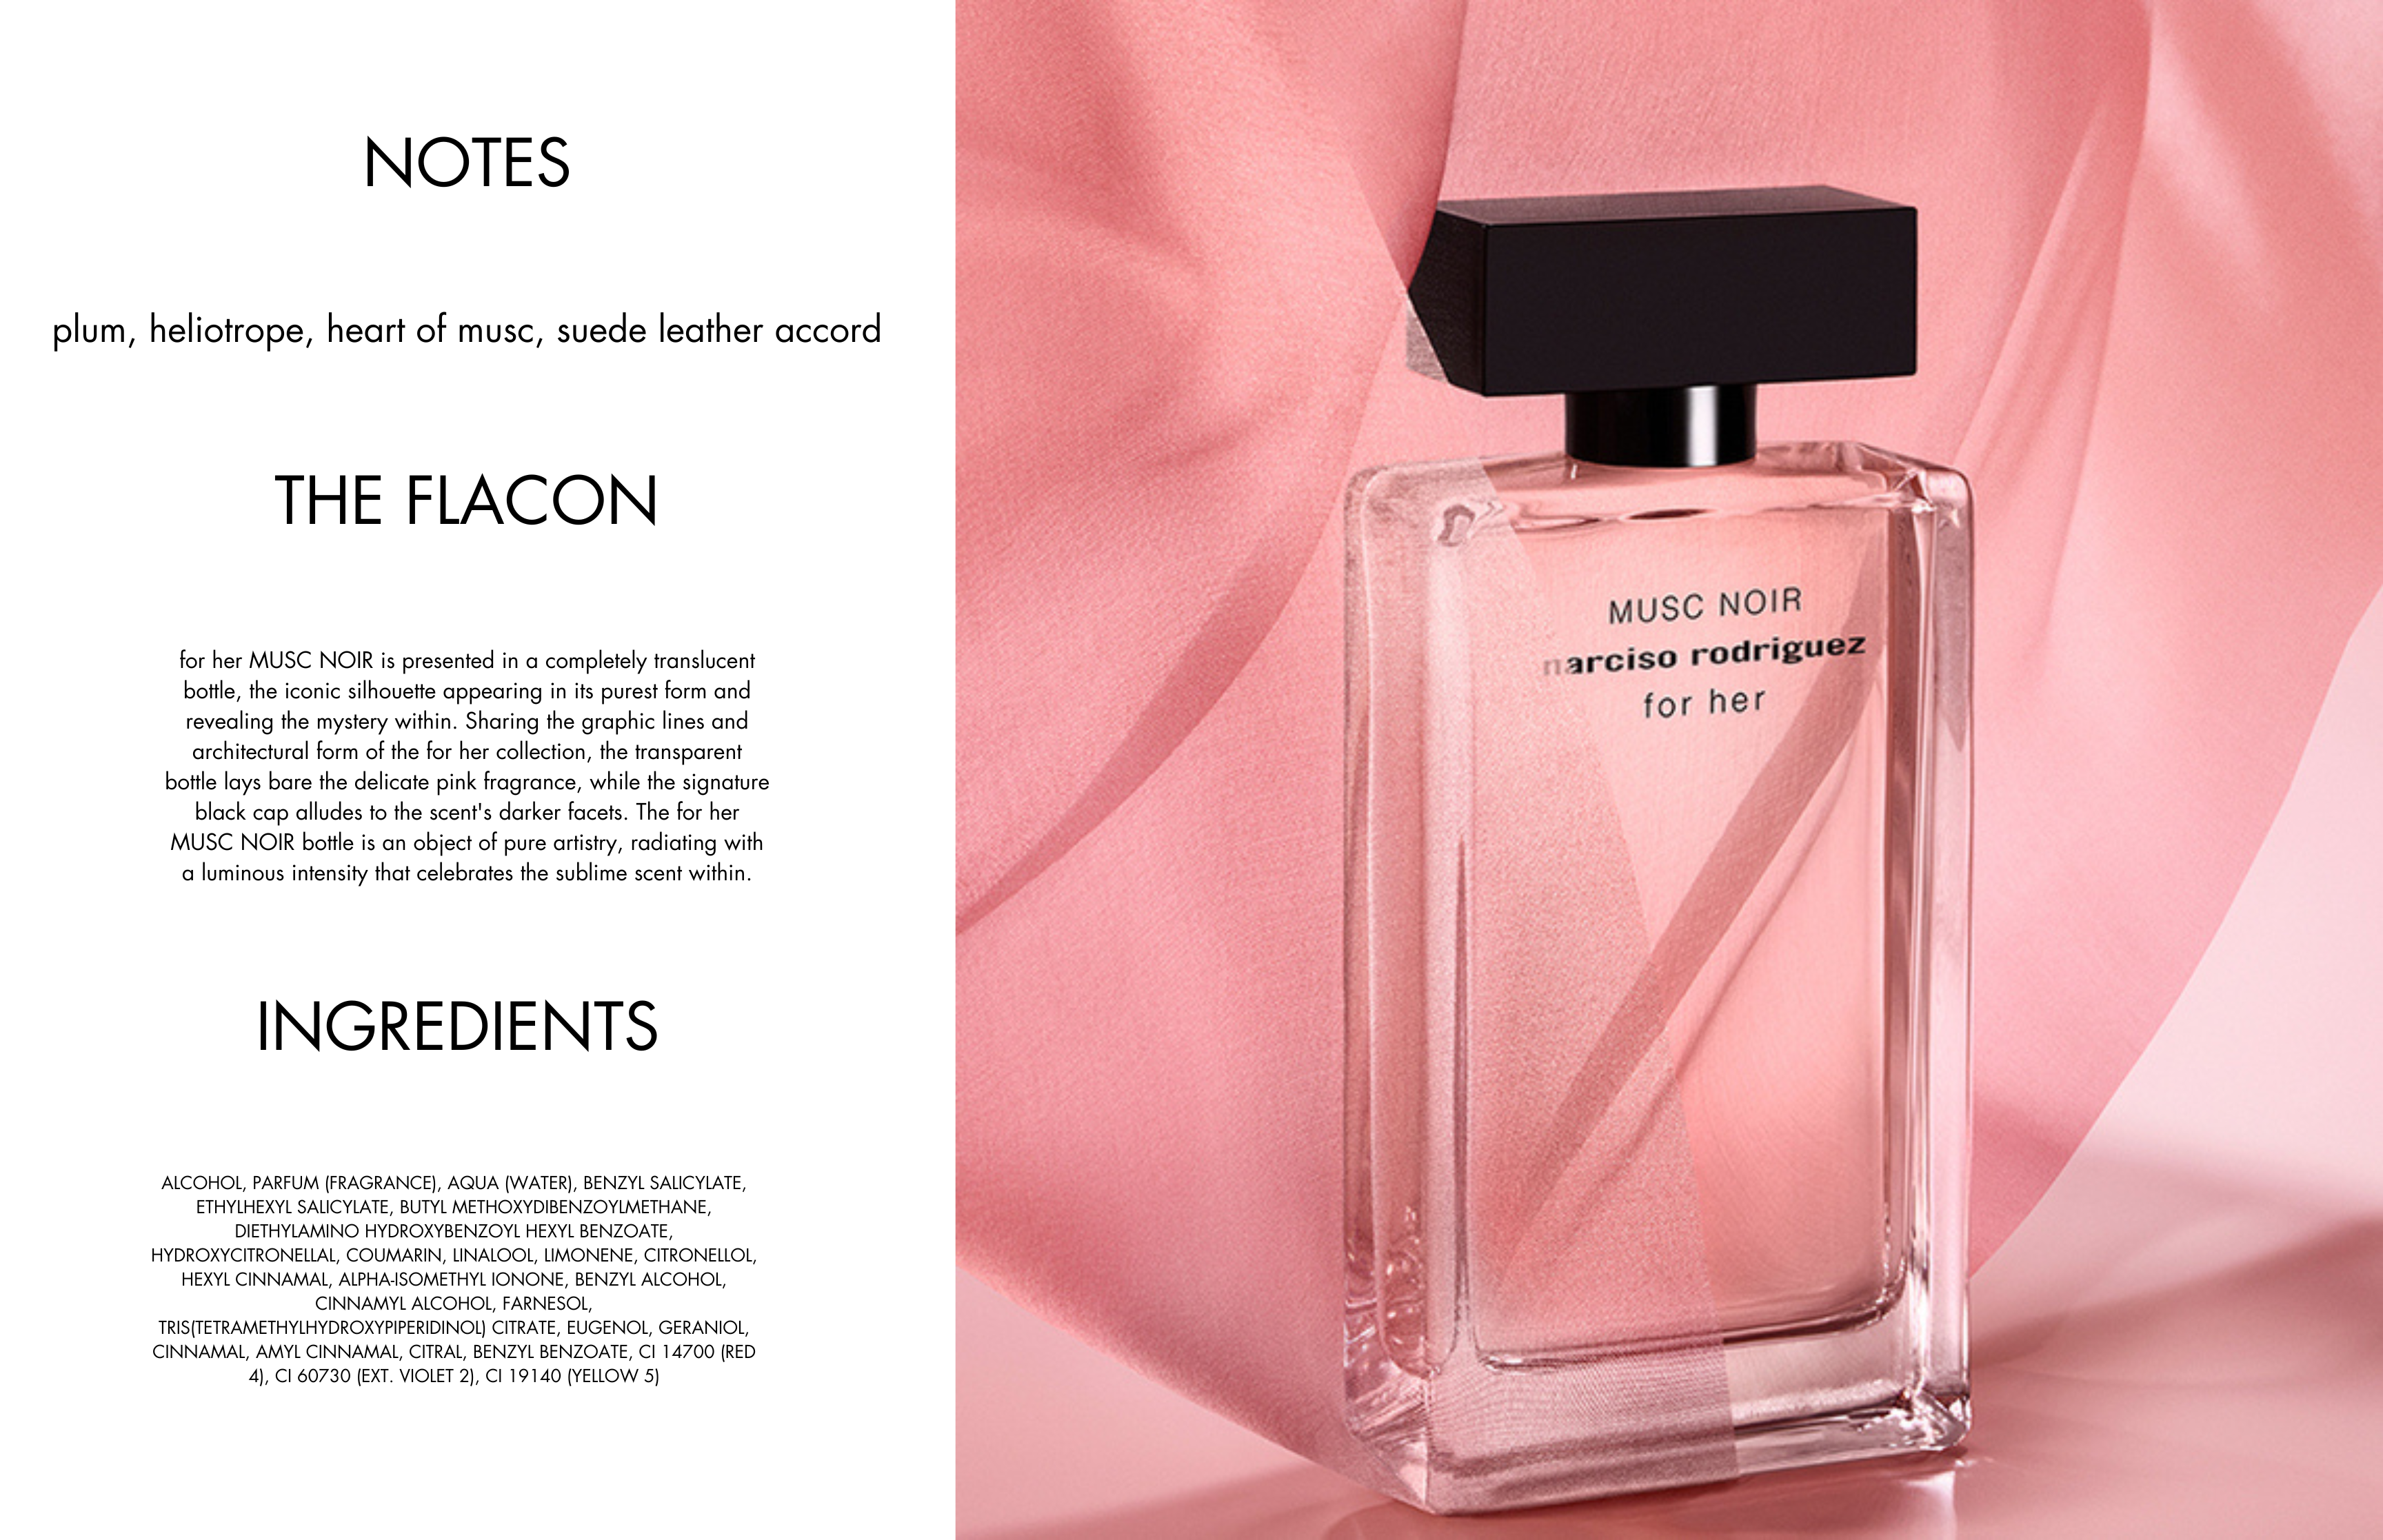 Narciso Rodriguez For Her Musc Noir Eau de Parfum Fragrance Notes and Ingredients
